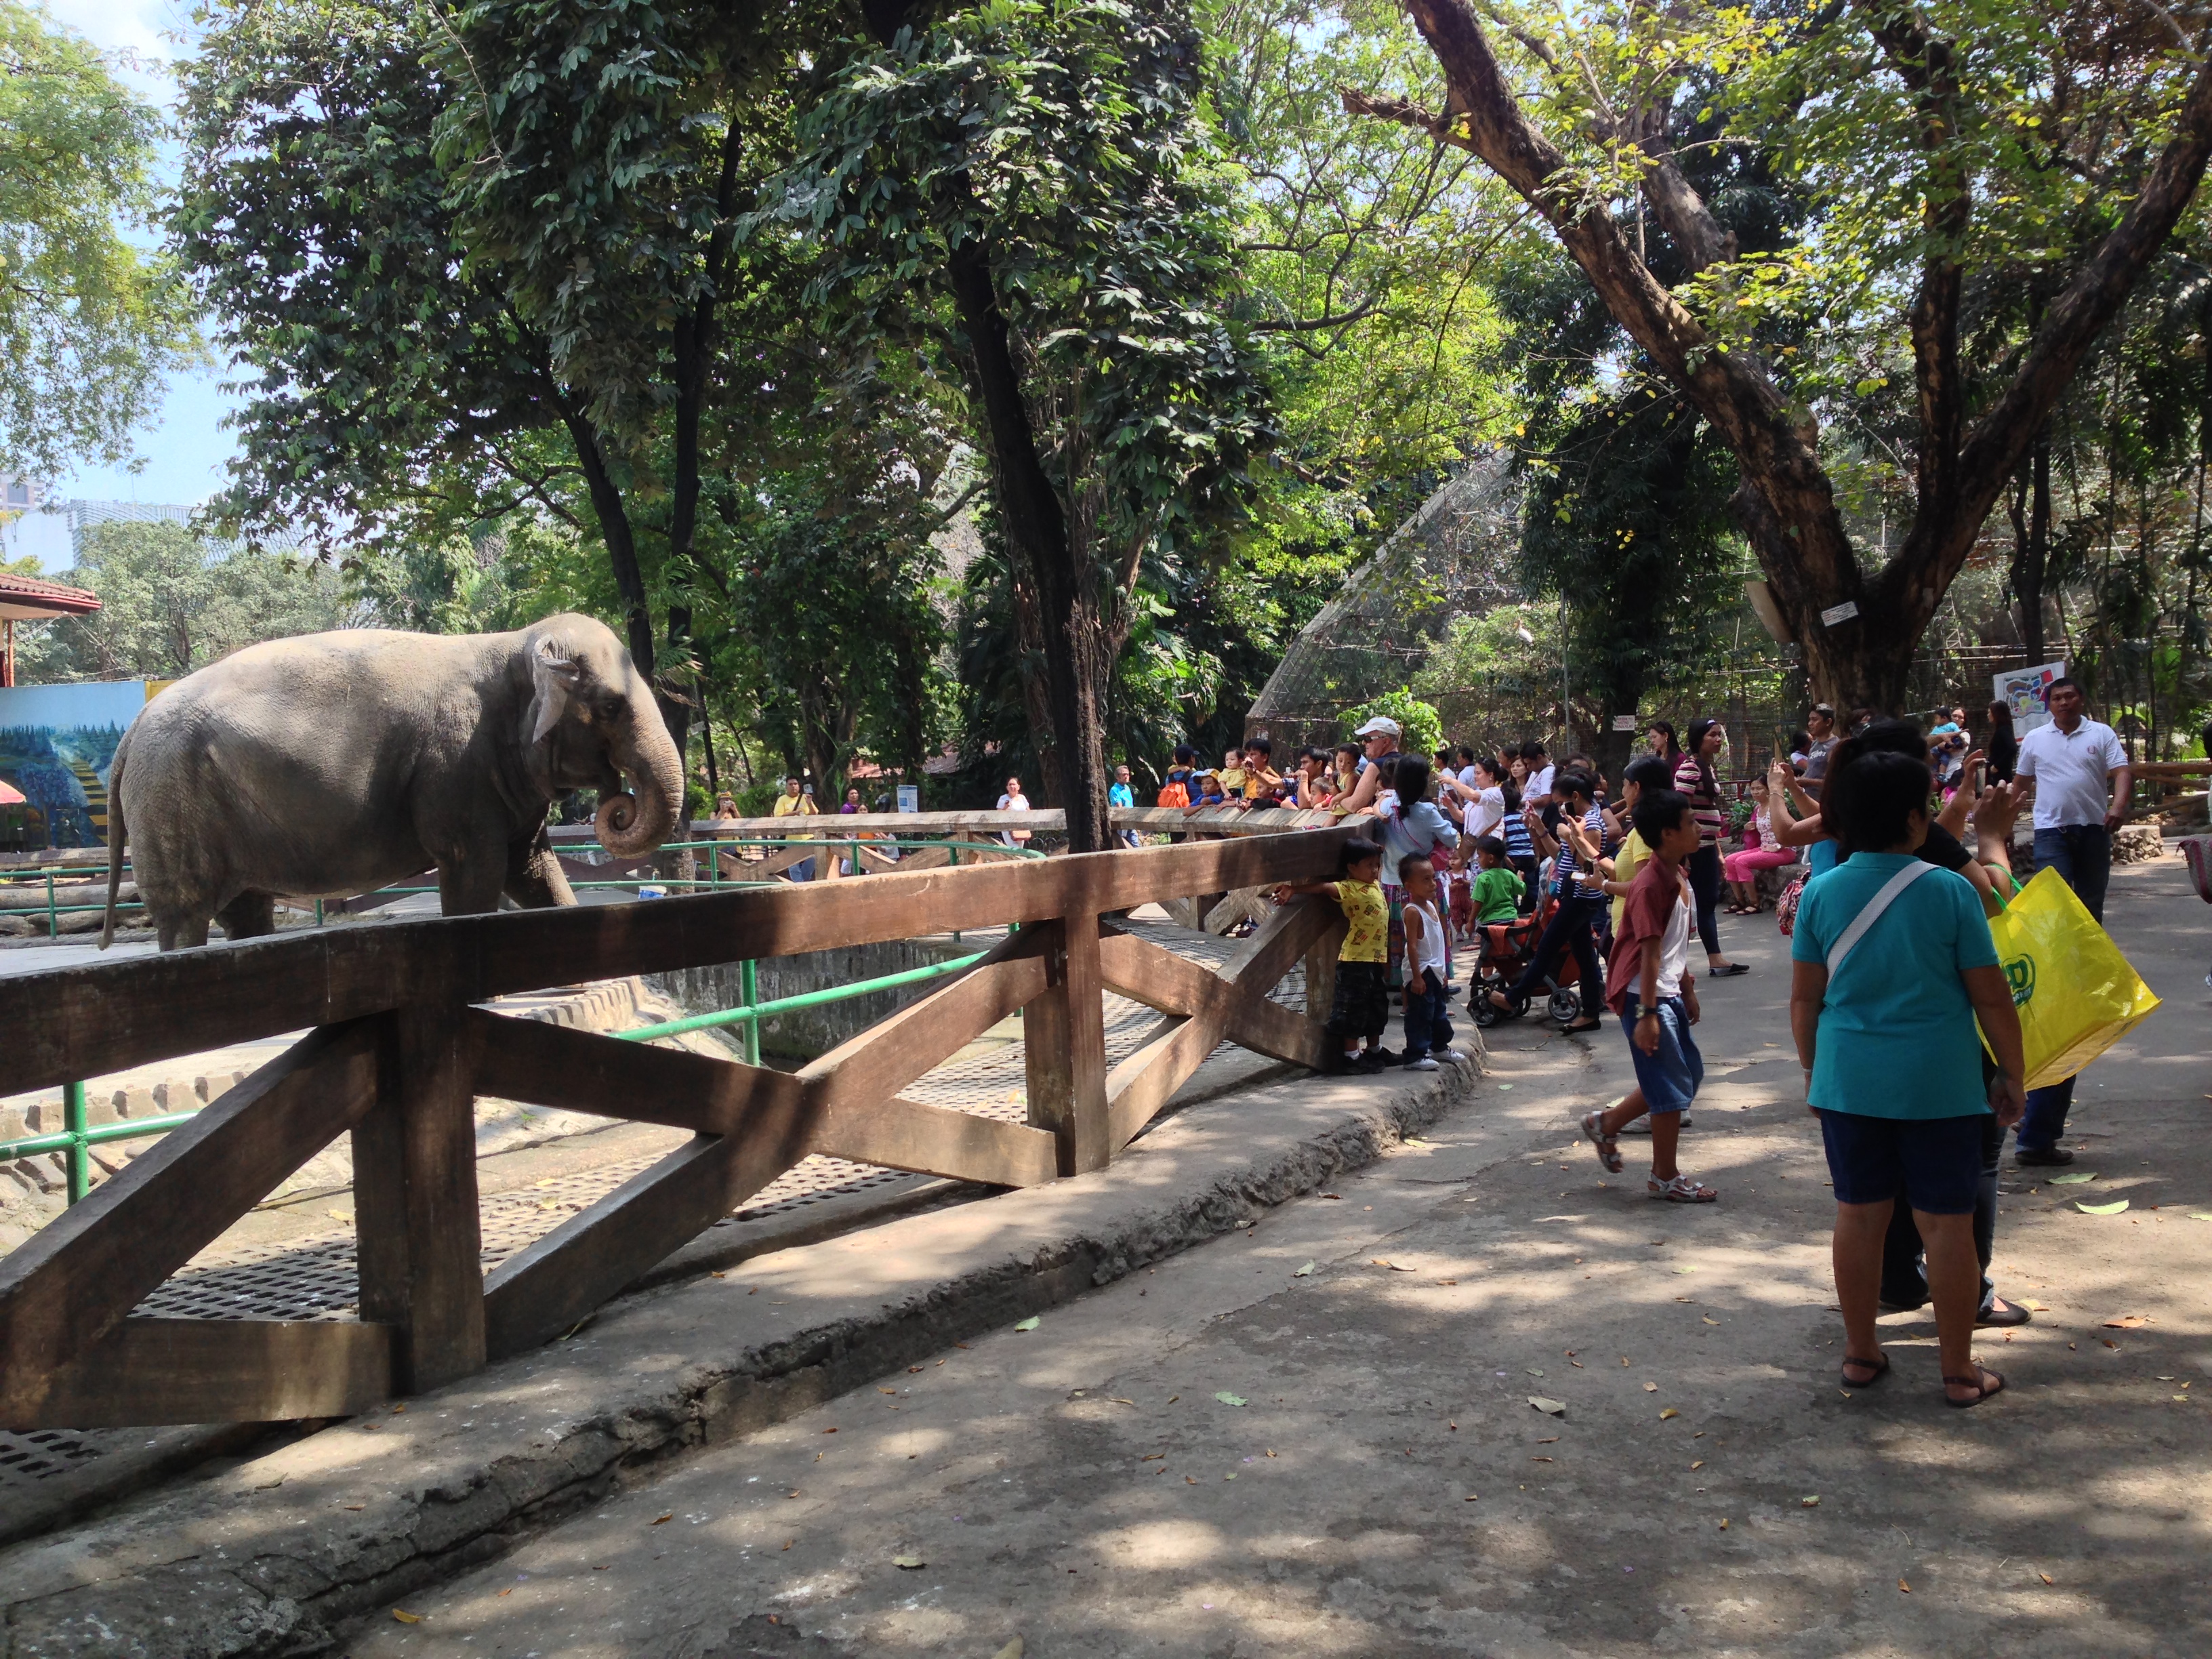 Manila Zoo